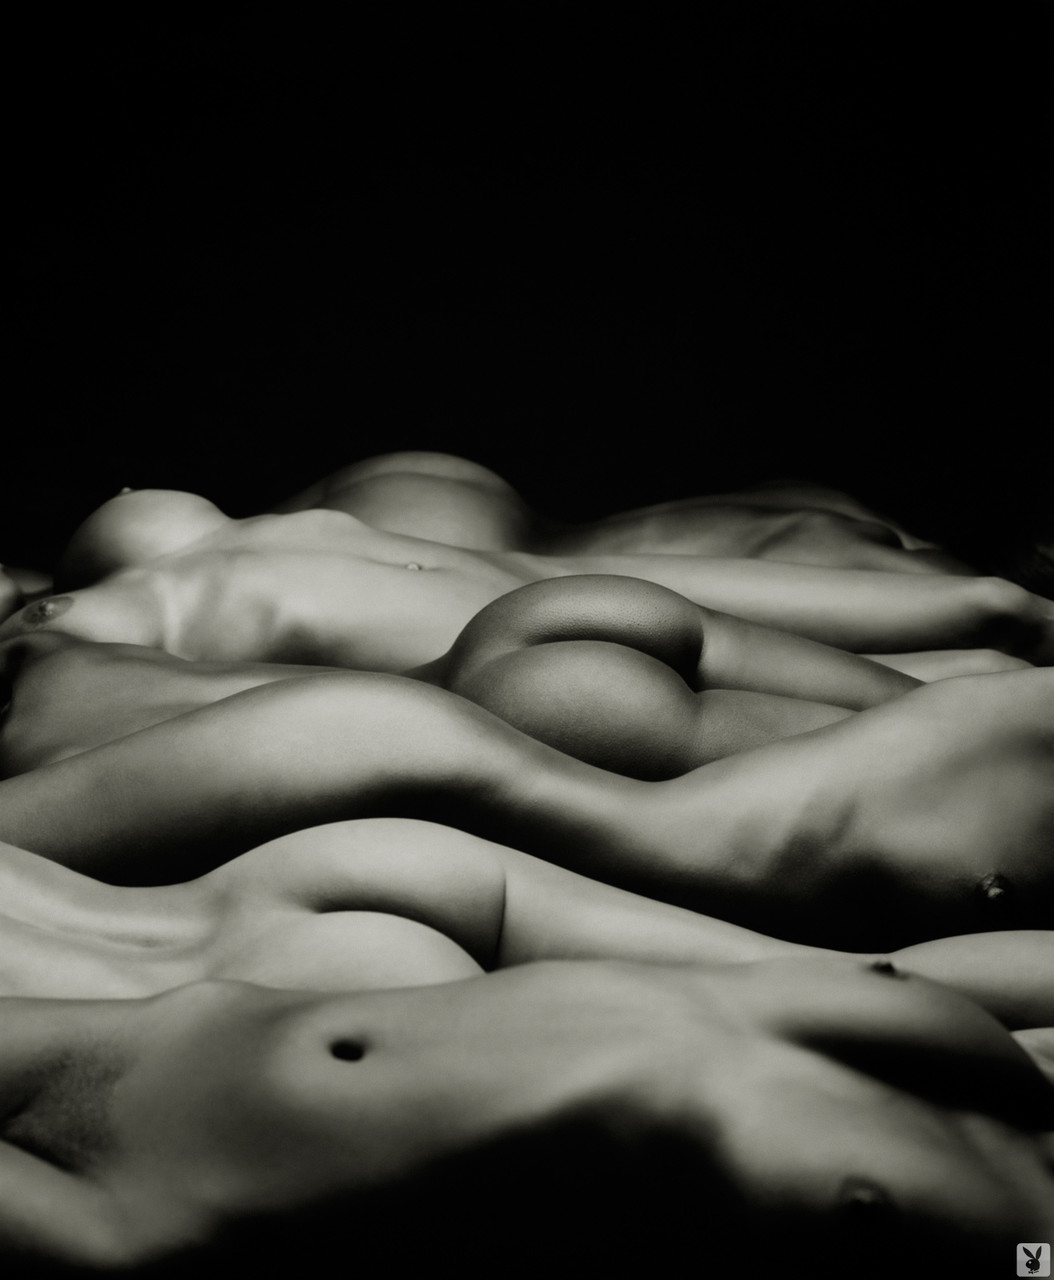 The hottest naked pornstars display their wares in fantasy adult film contest porno foto #426337821 | Playboy Plus Pics, Hiromi Oshima, Irina Voronina, jTia Taylor, Krista Kelly, Serria Tawan, Public, mobiele porno